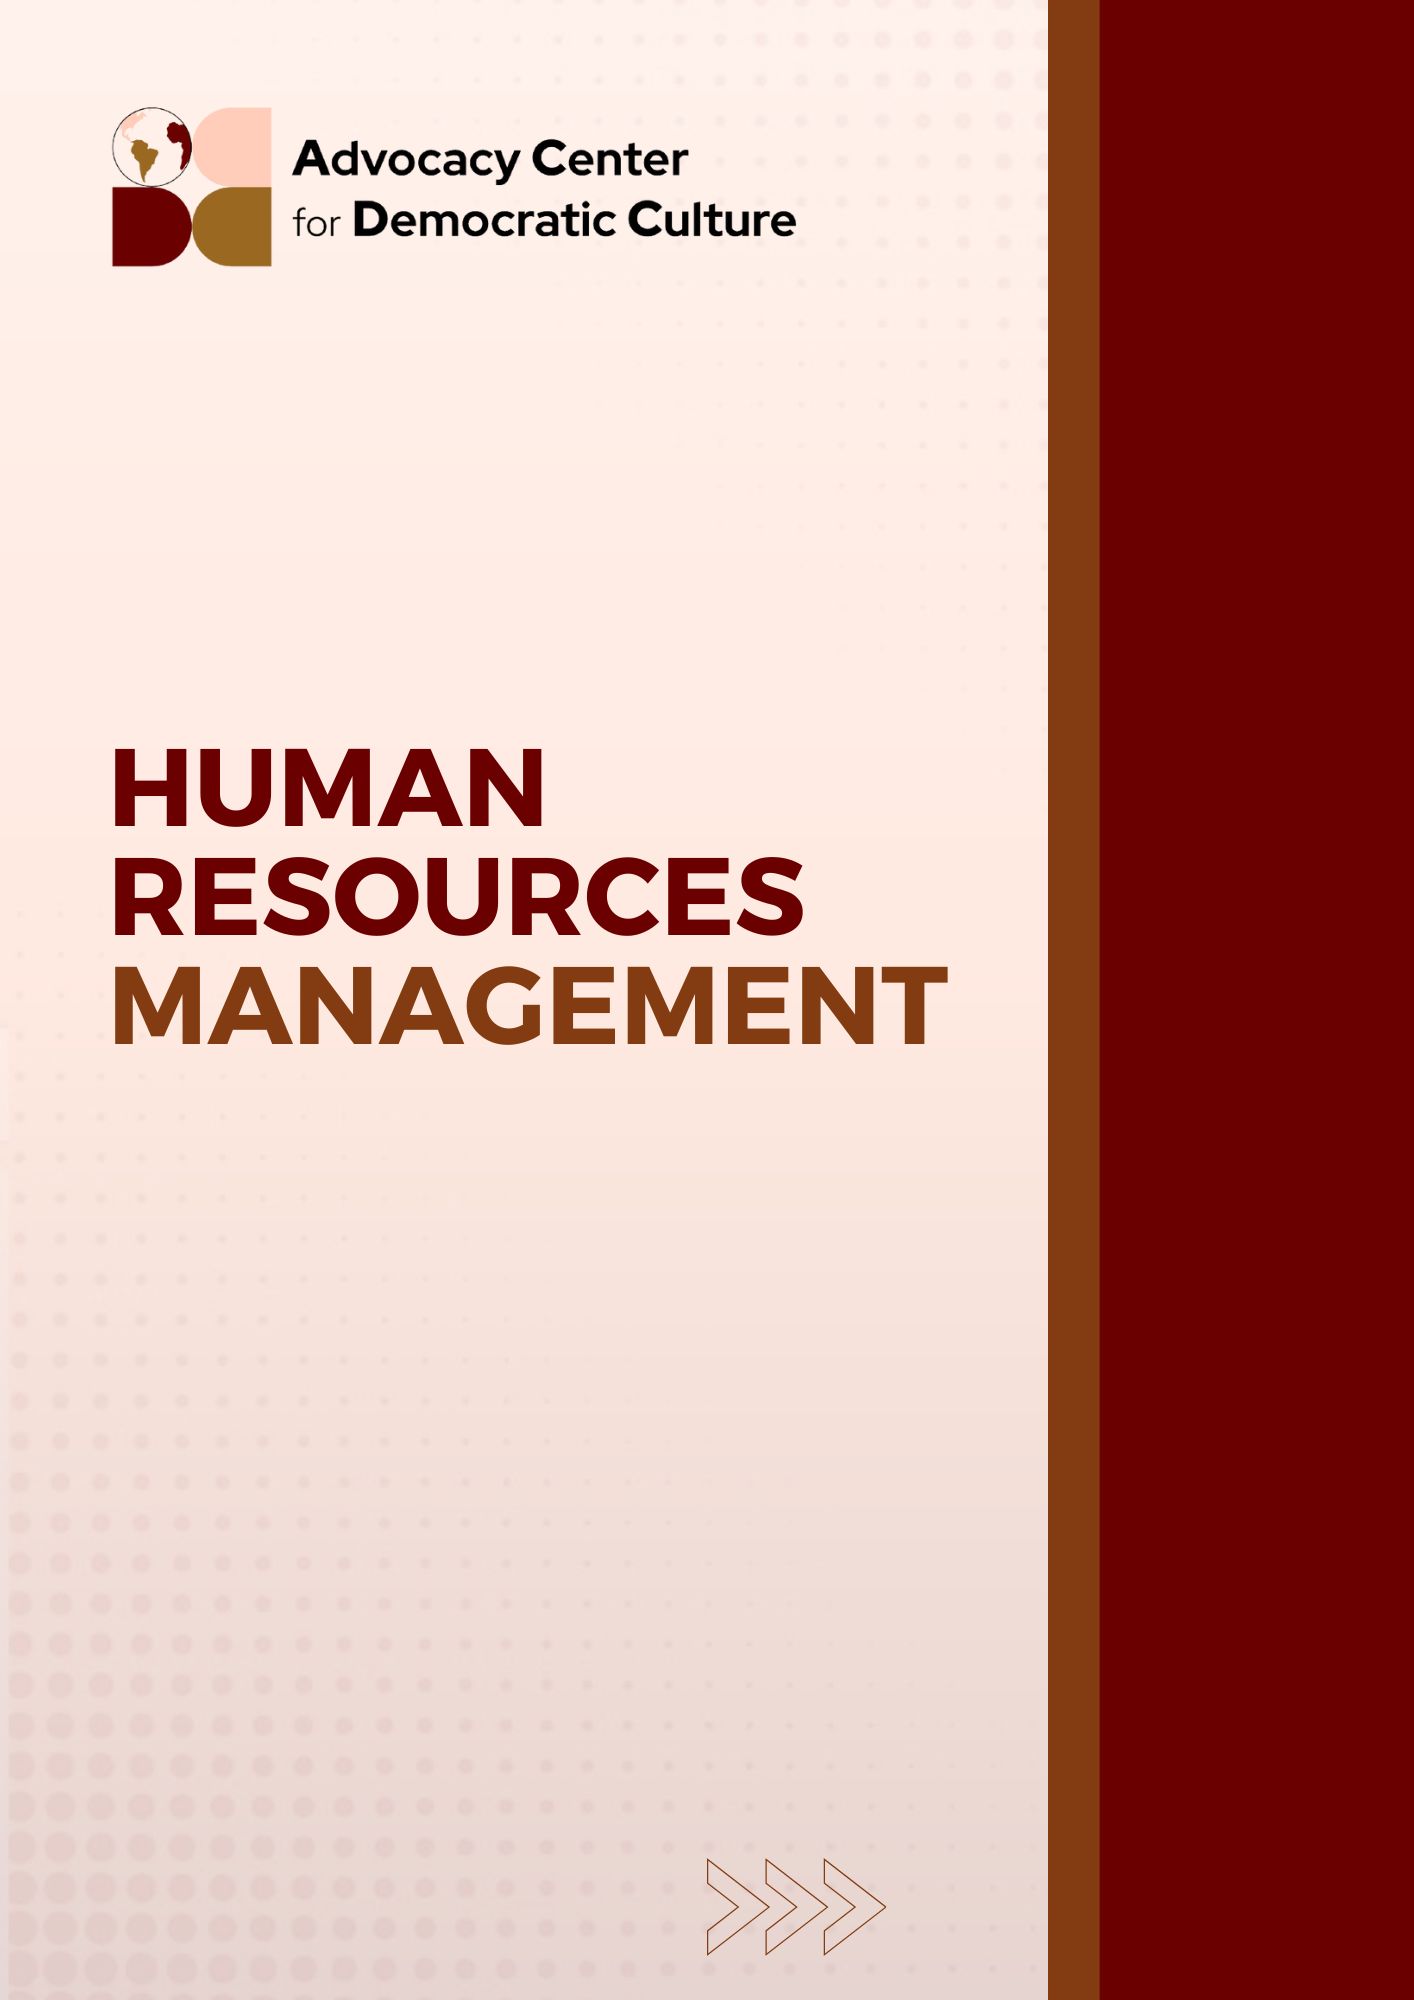 Human Resources Management
